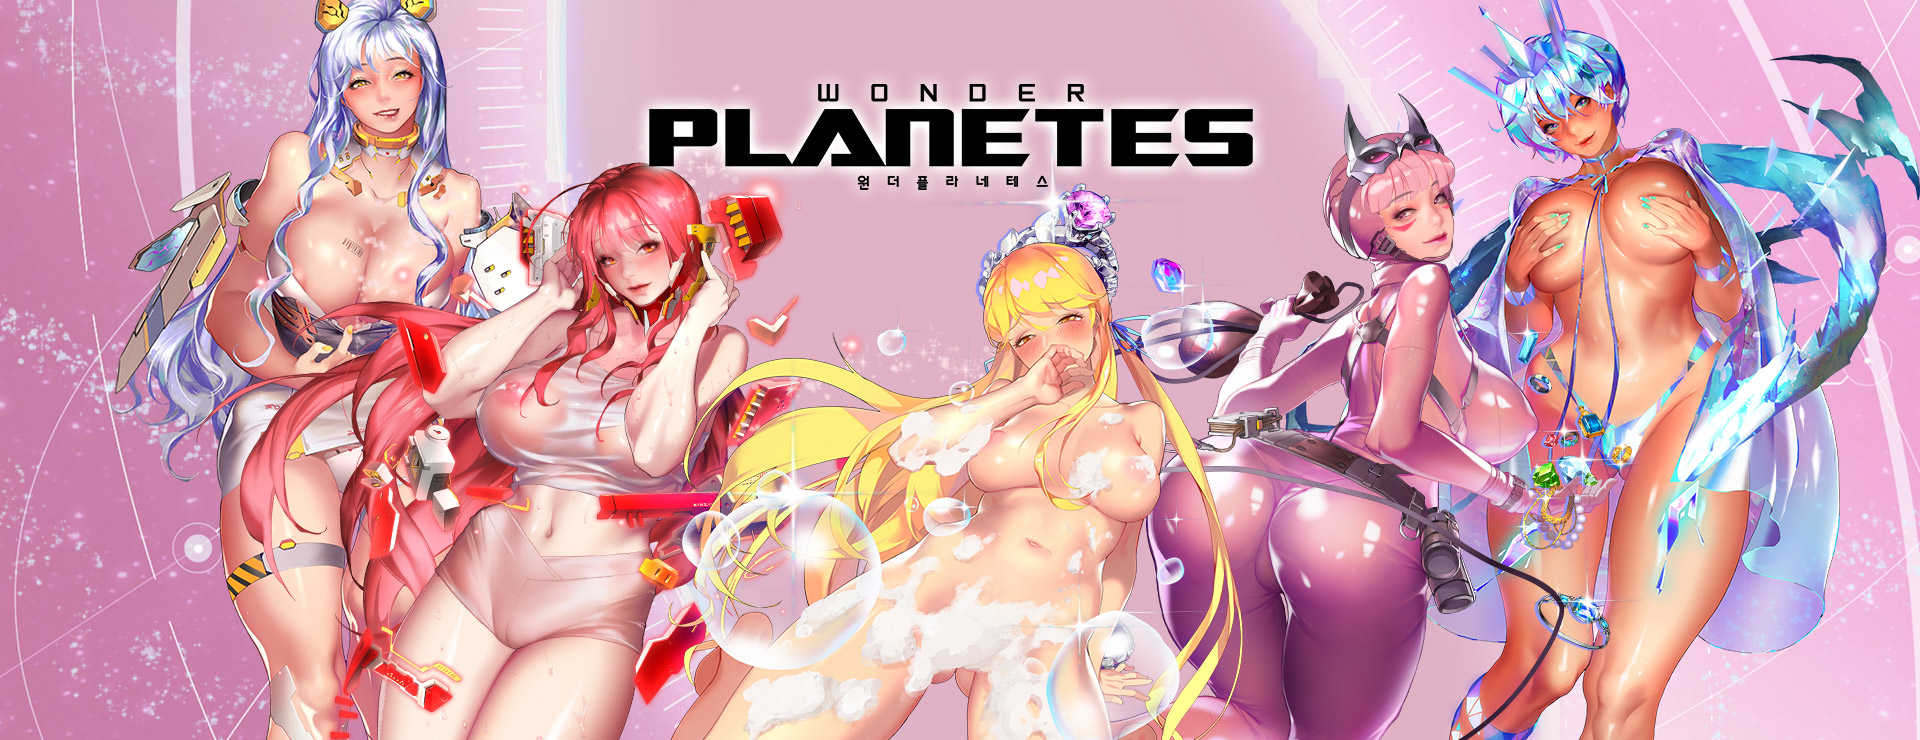 Wonder Planetes - Action Adventure Game